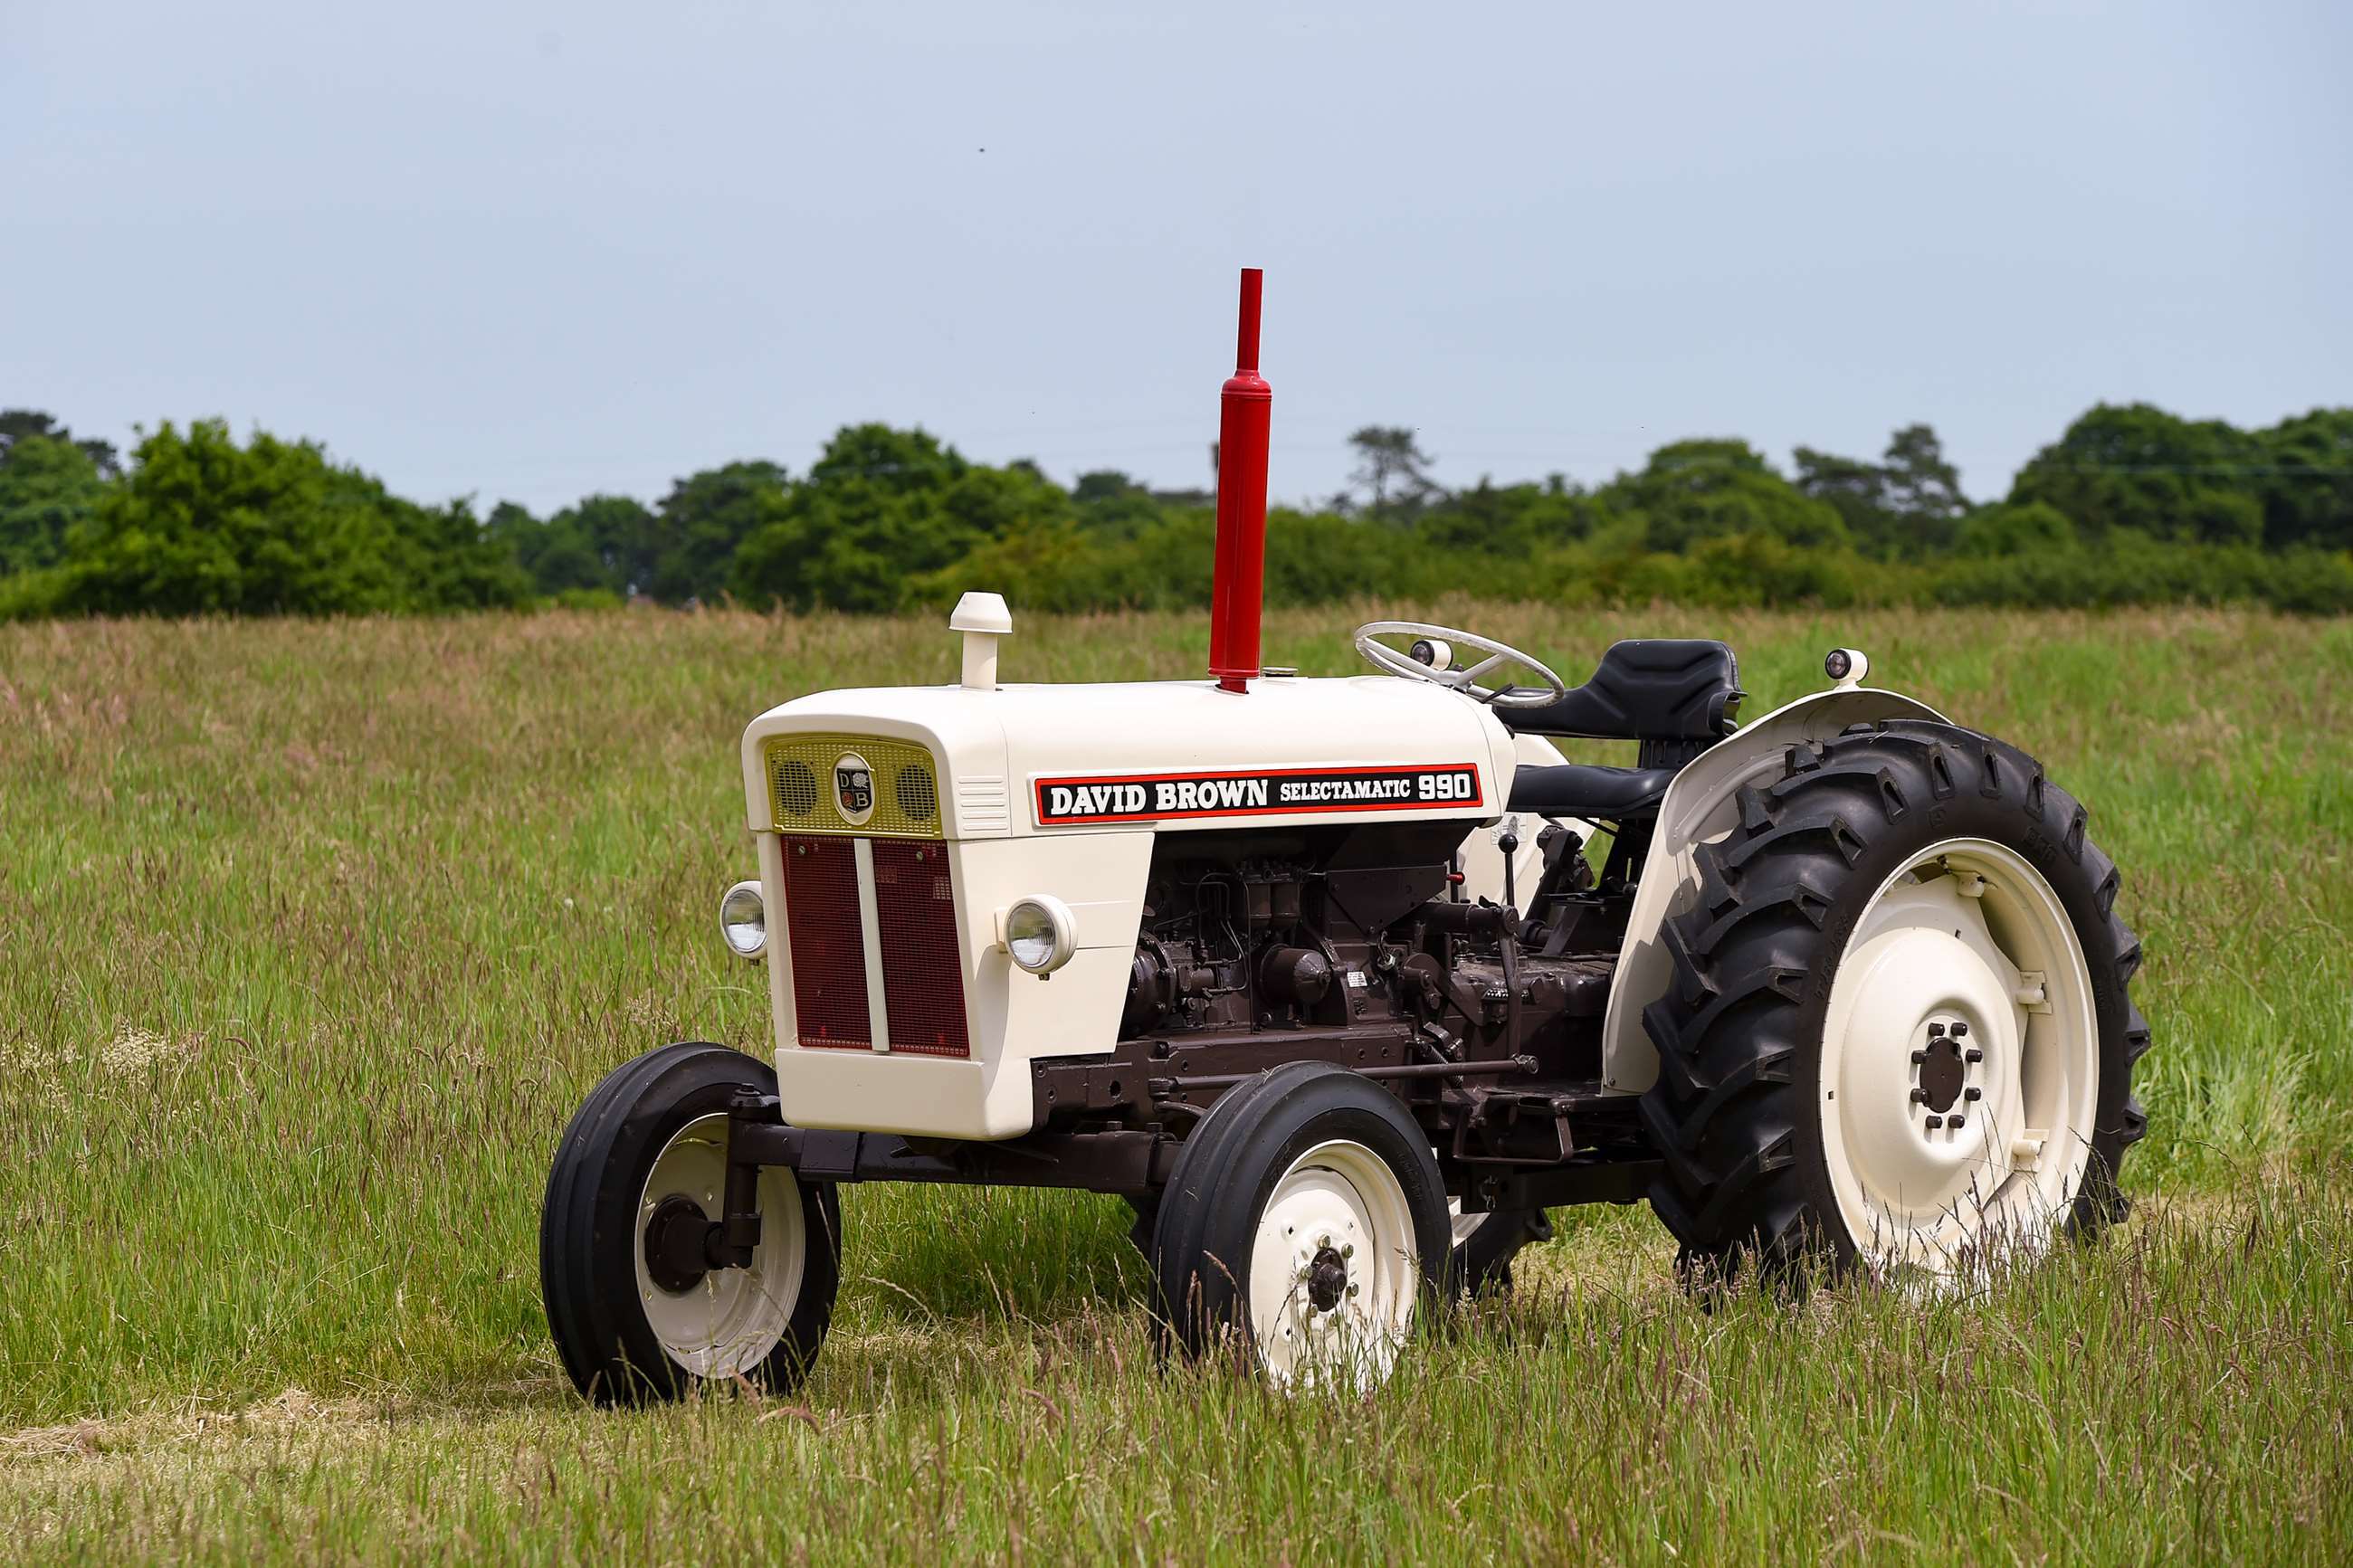 aston-martin-bonhams-sale-david-brown-selectamatic-990-tractor-goodwood-02052019.jpg